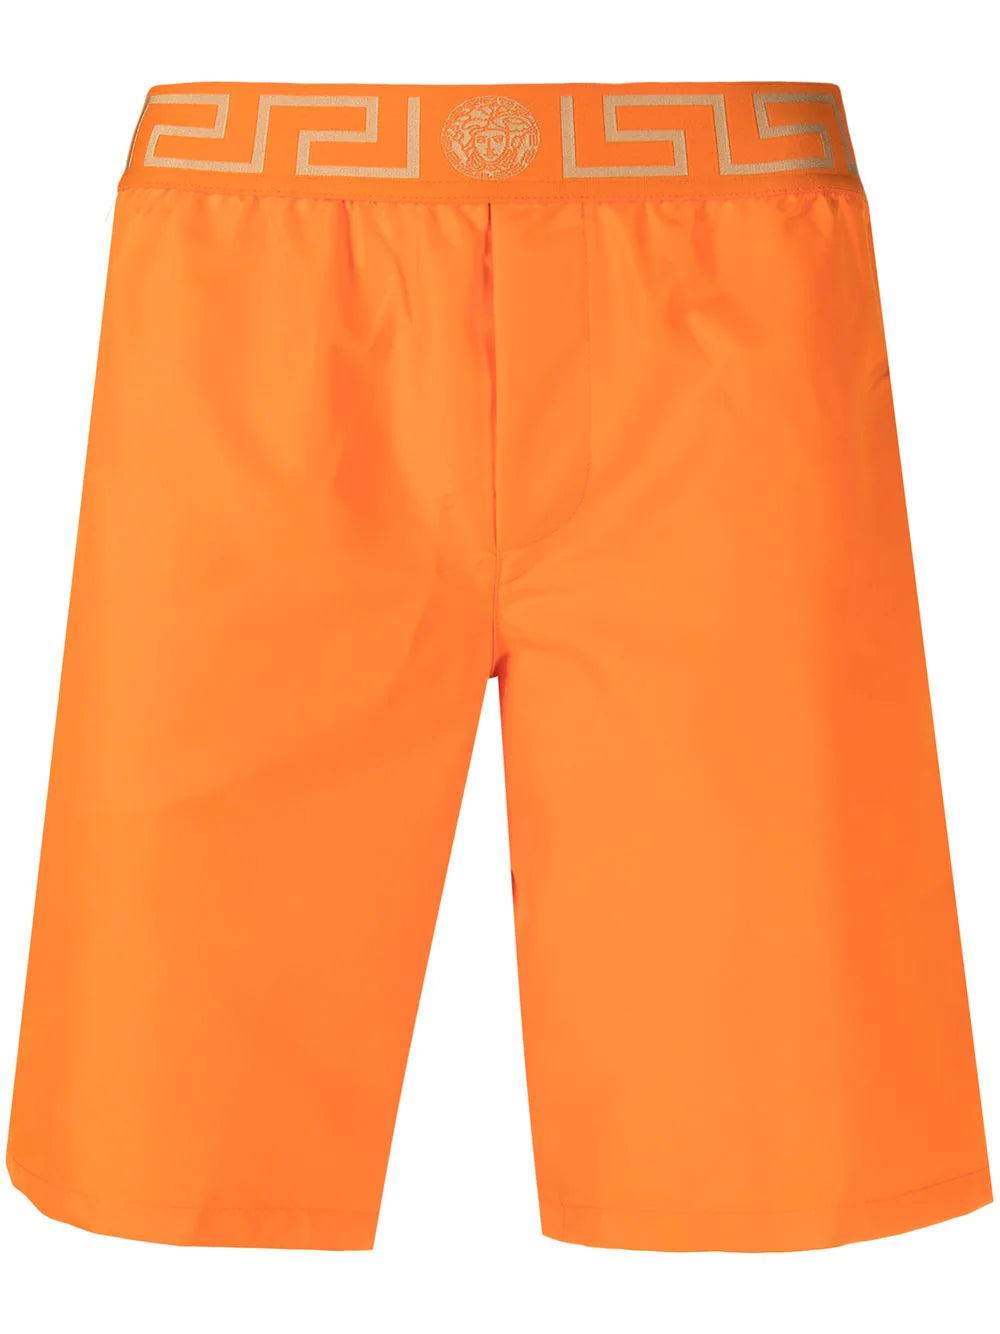 Versace Orange Greca Border Swim Shorts